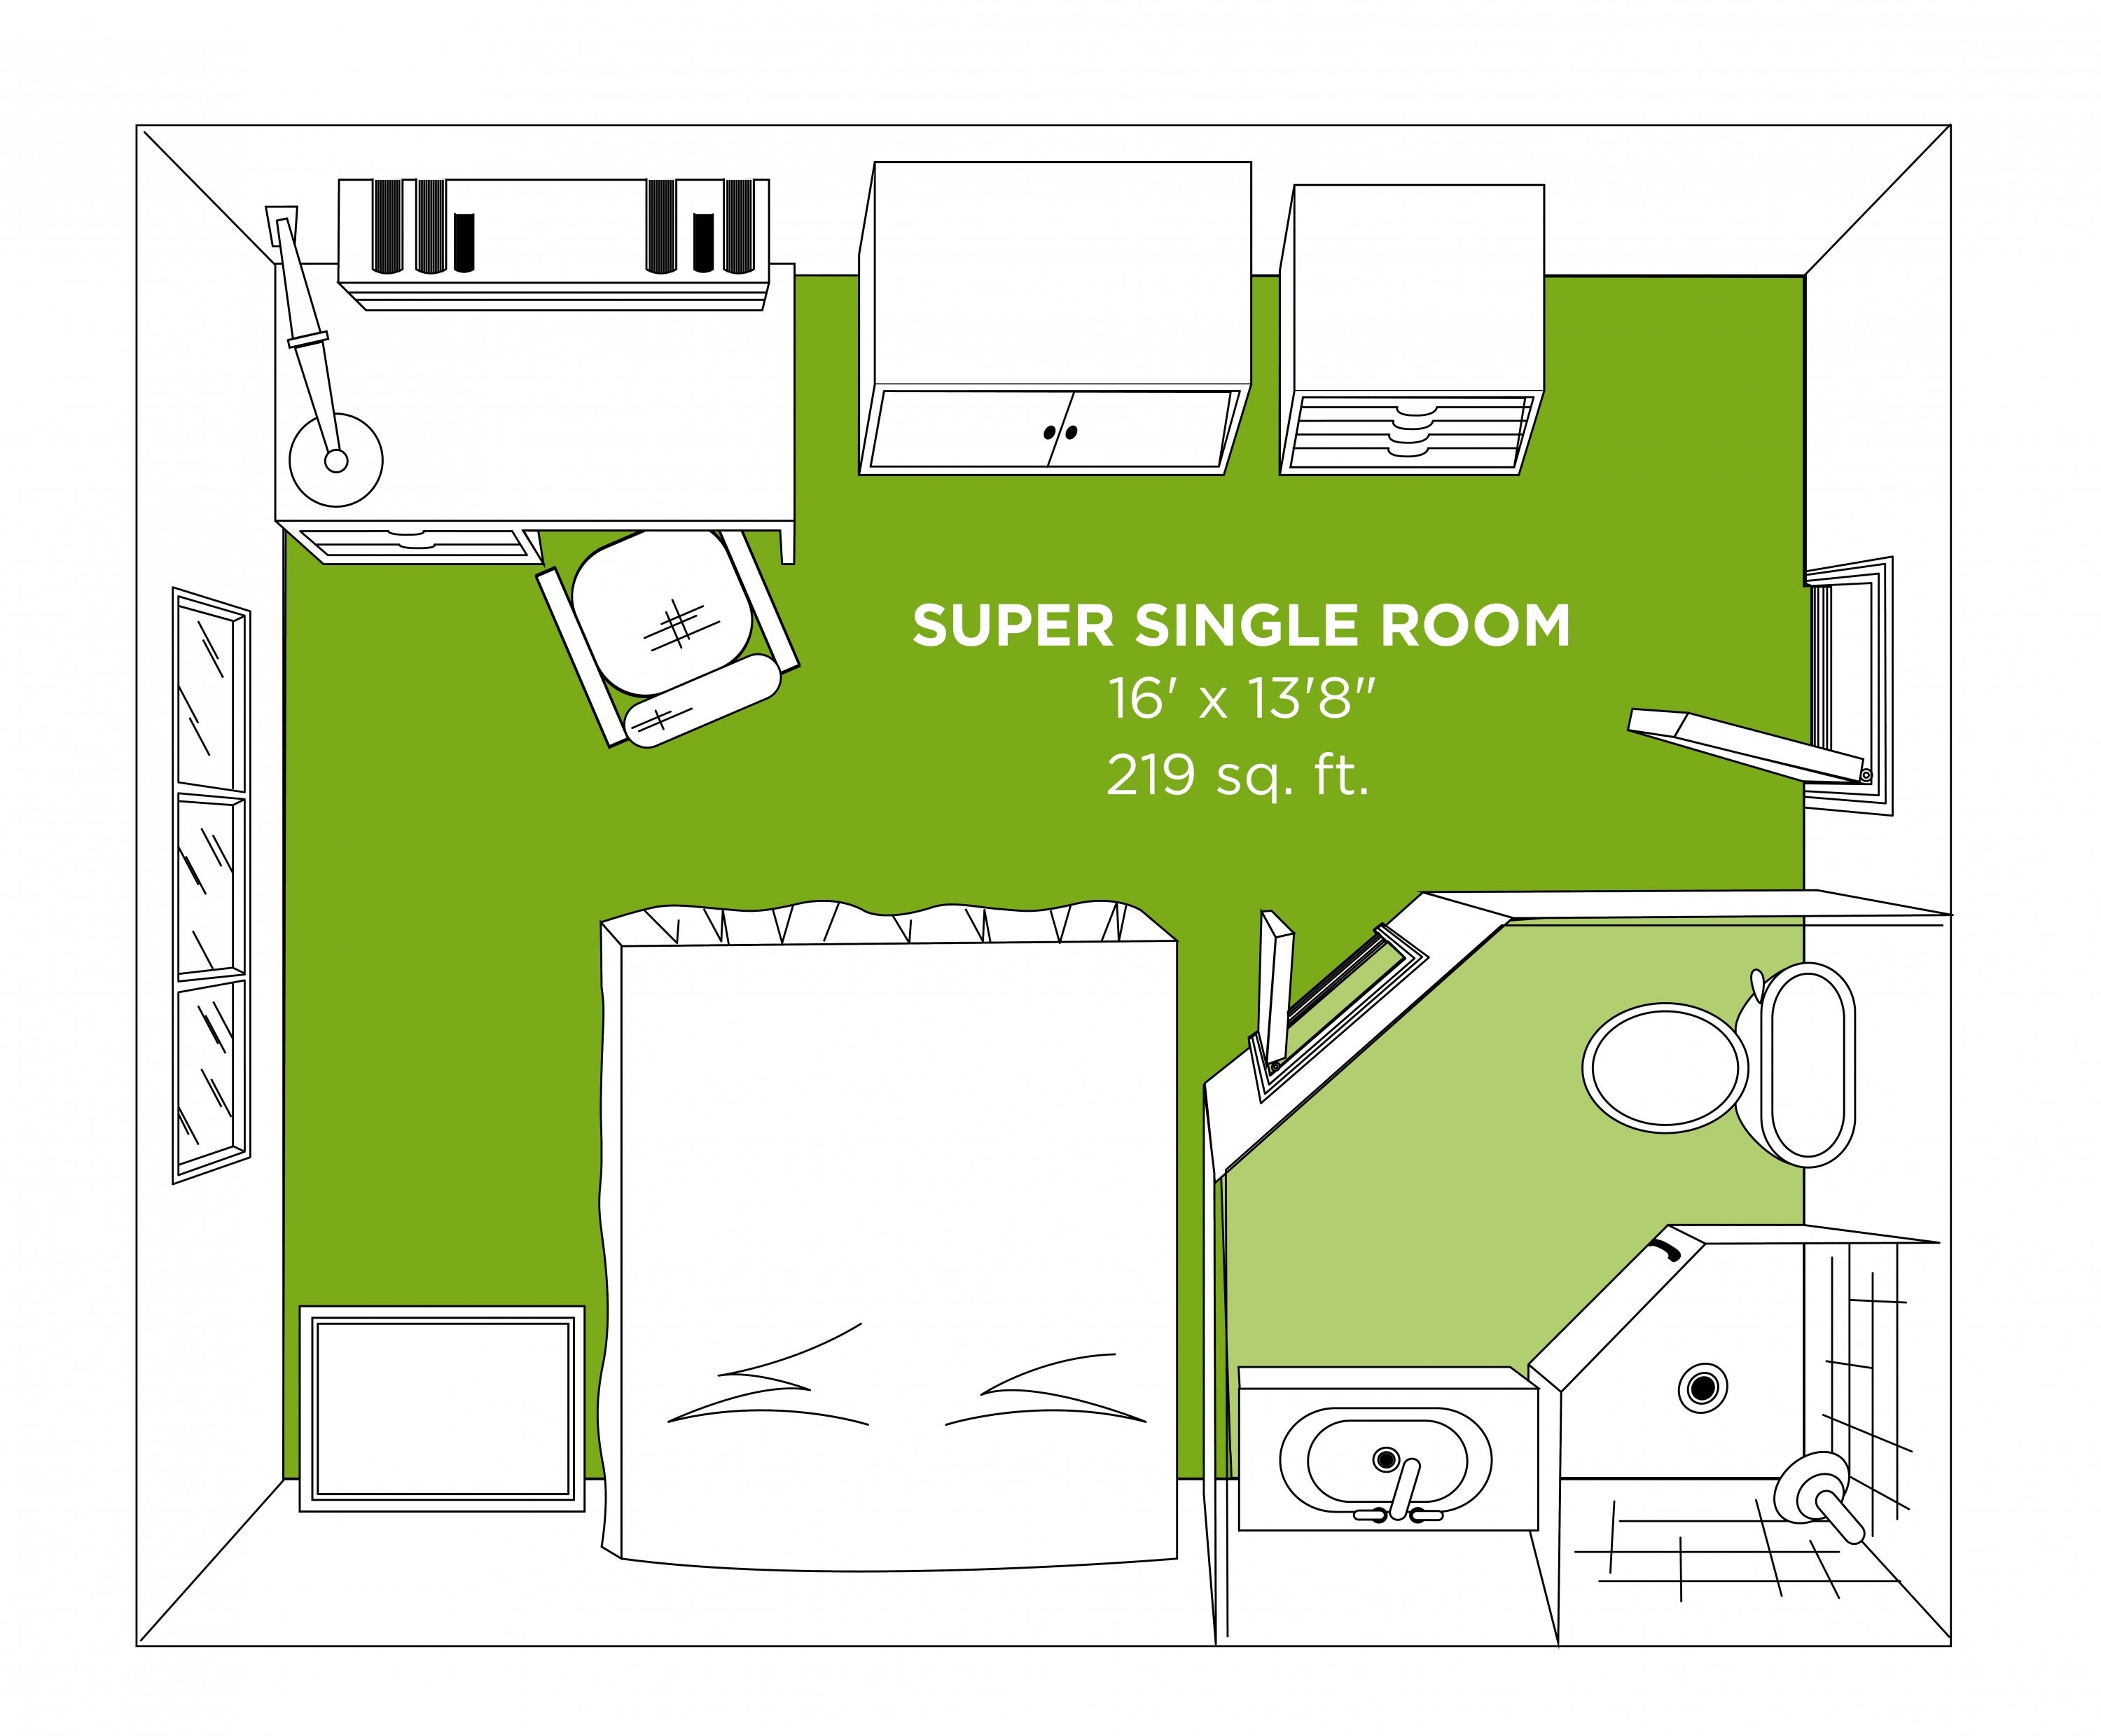 Super Single room layout